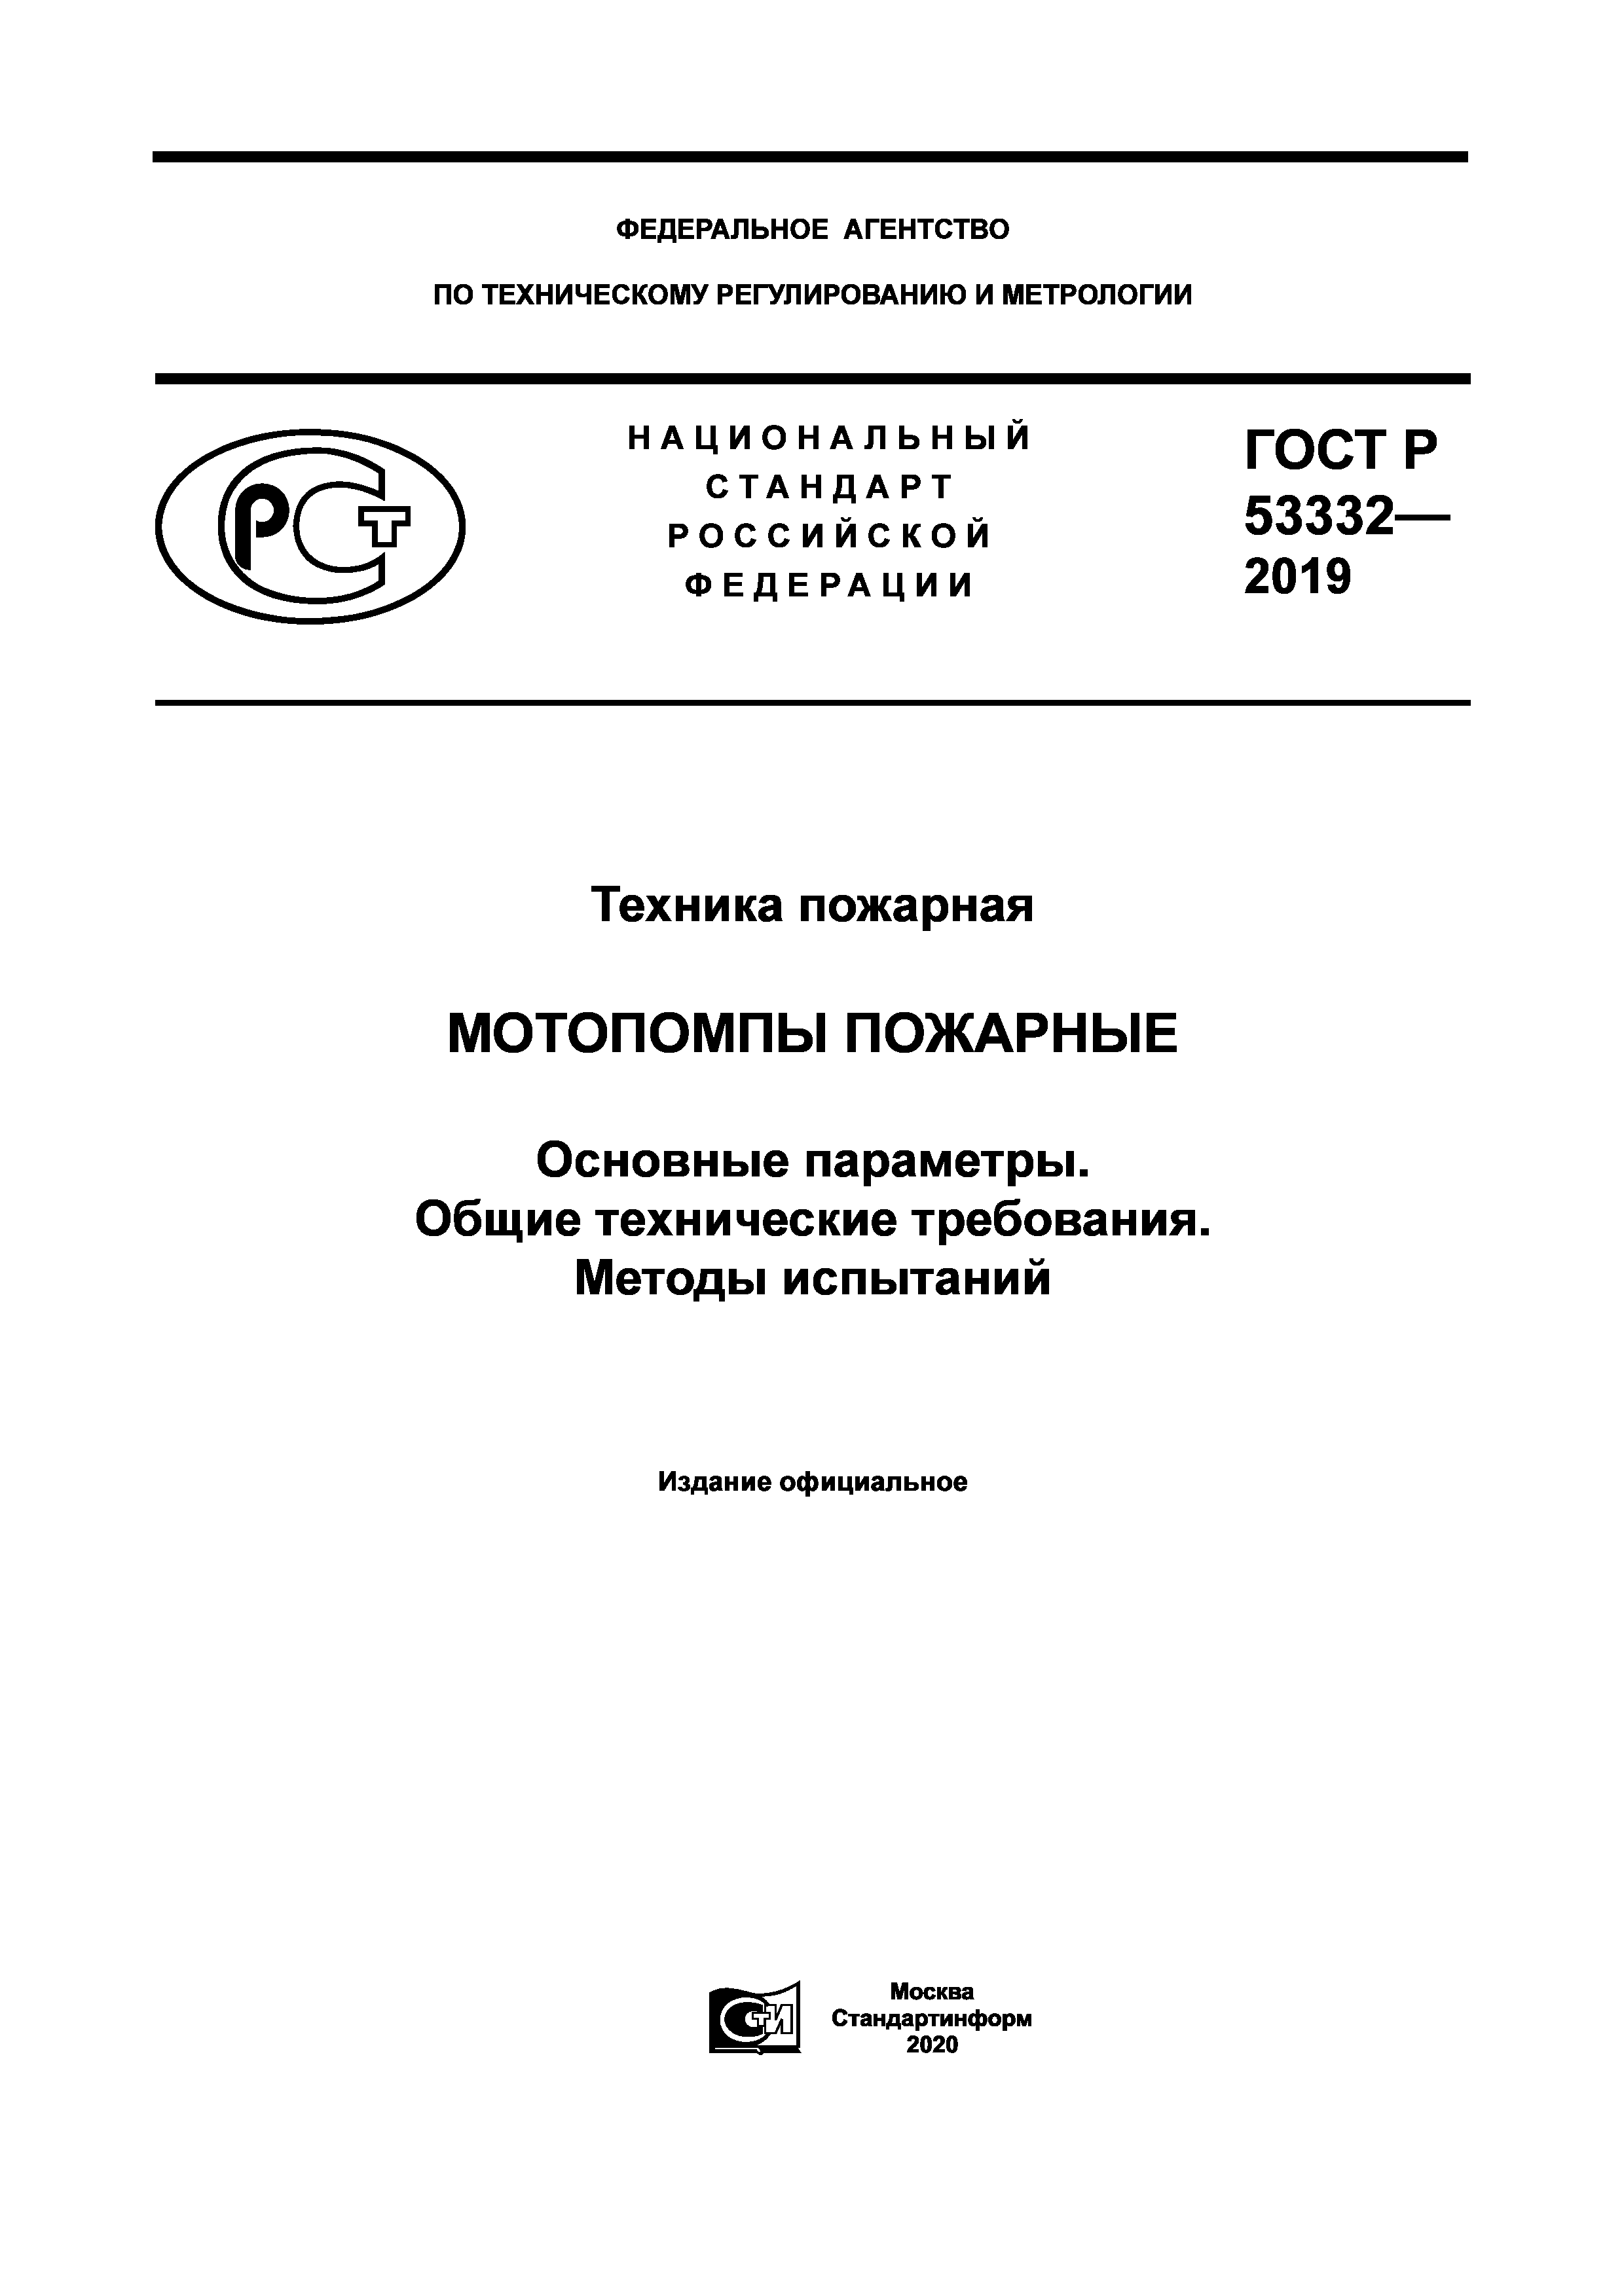 ГОСТ Р 53332-2019